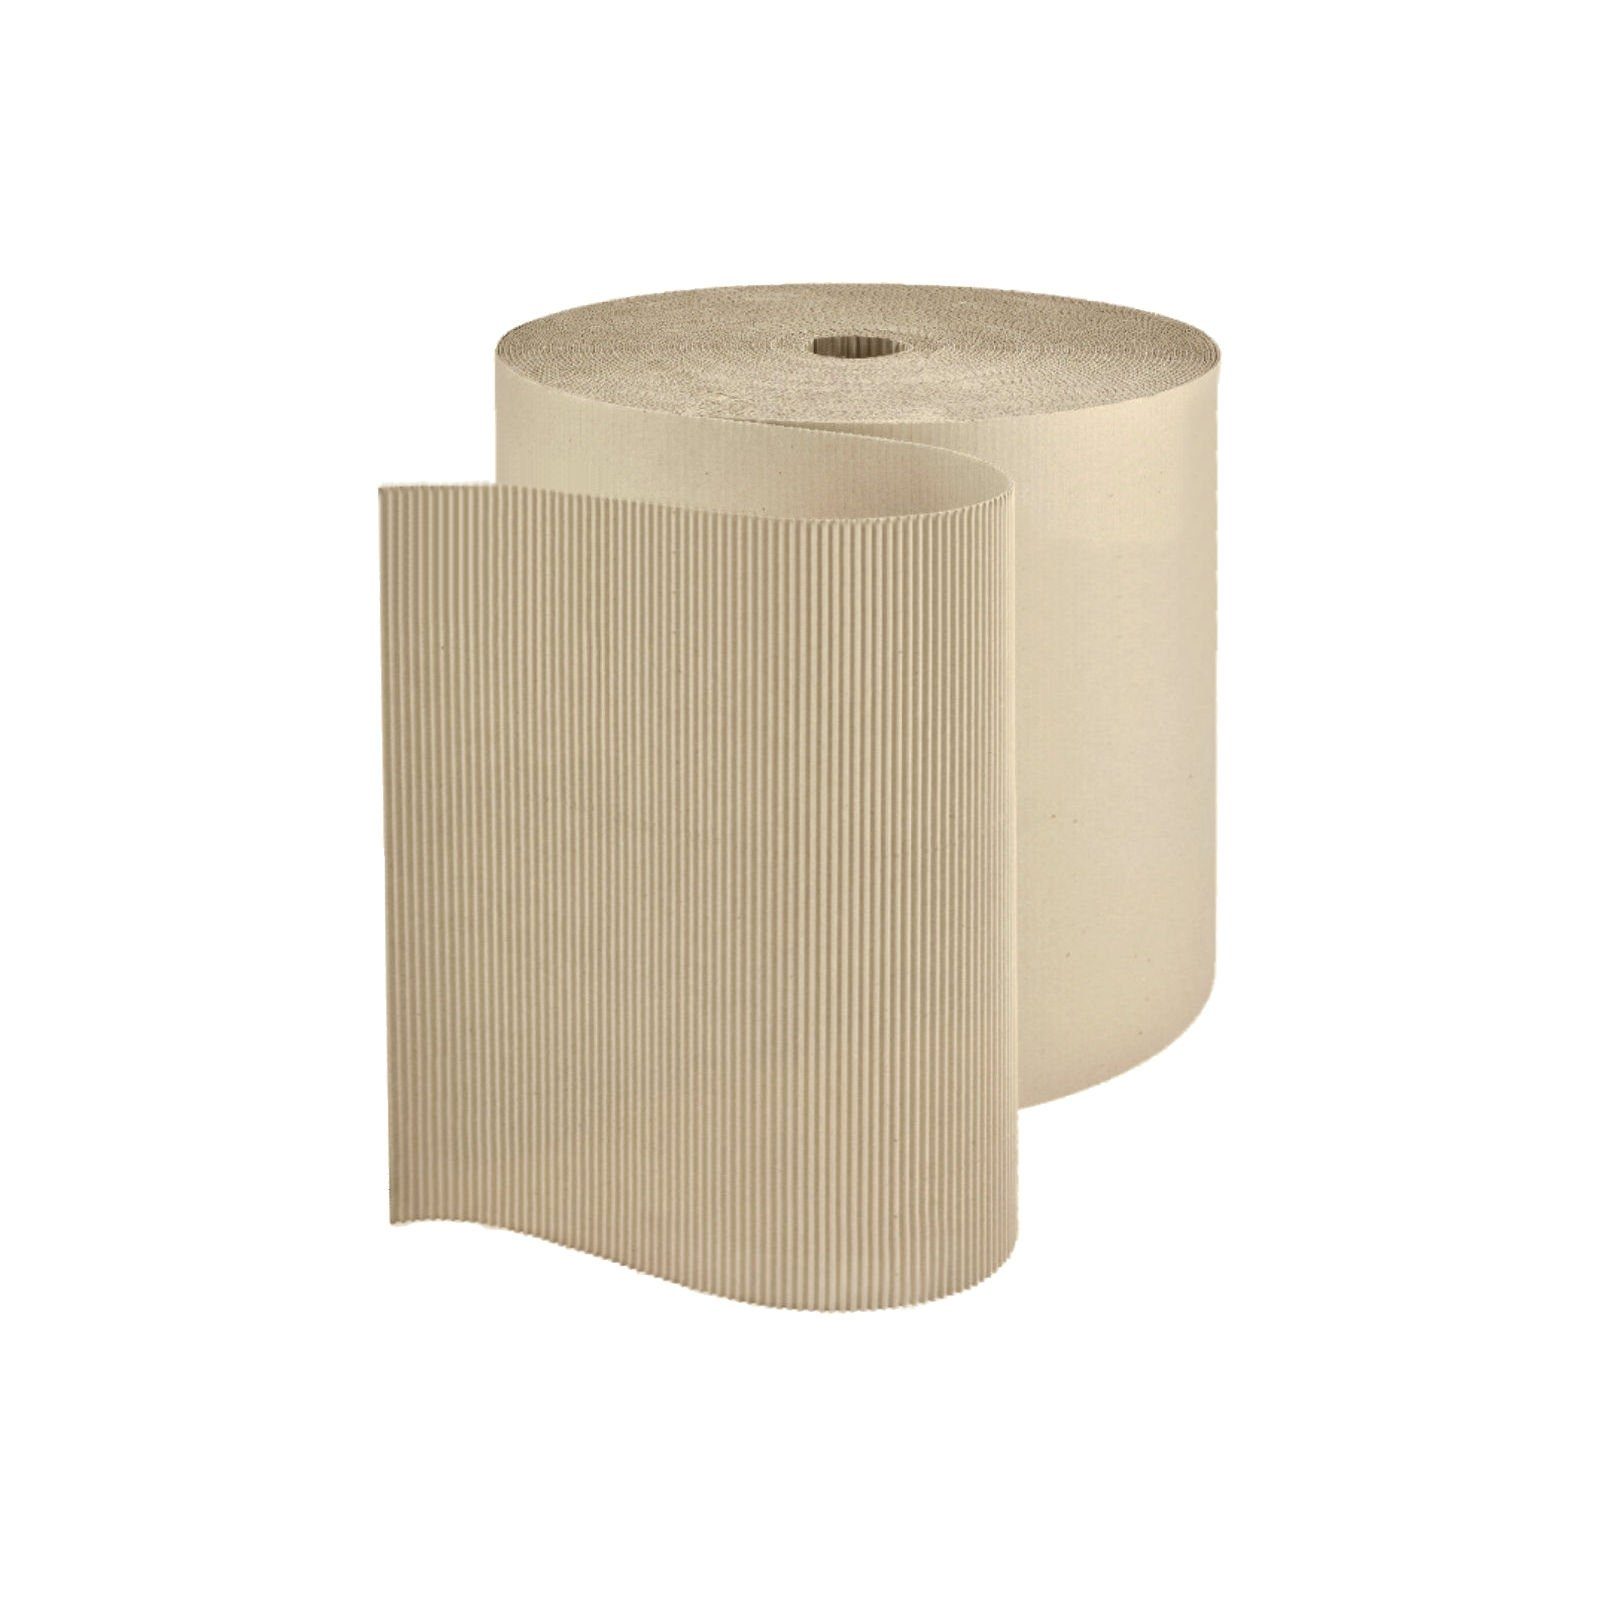 Rollen-Wellenpappe 0,5m Wellpappe Seidenpapier, Polstermaterial Verpackungen Breite Grau KK